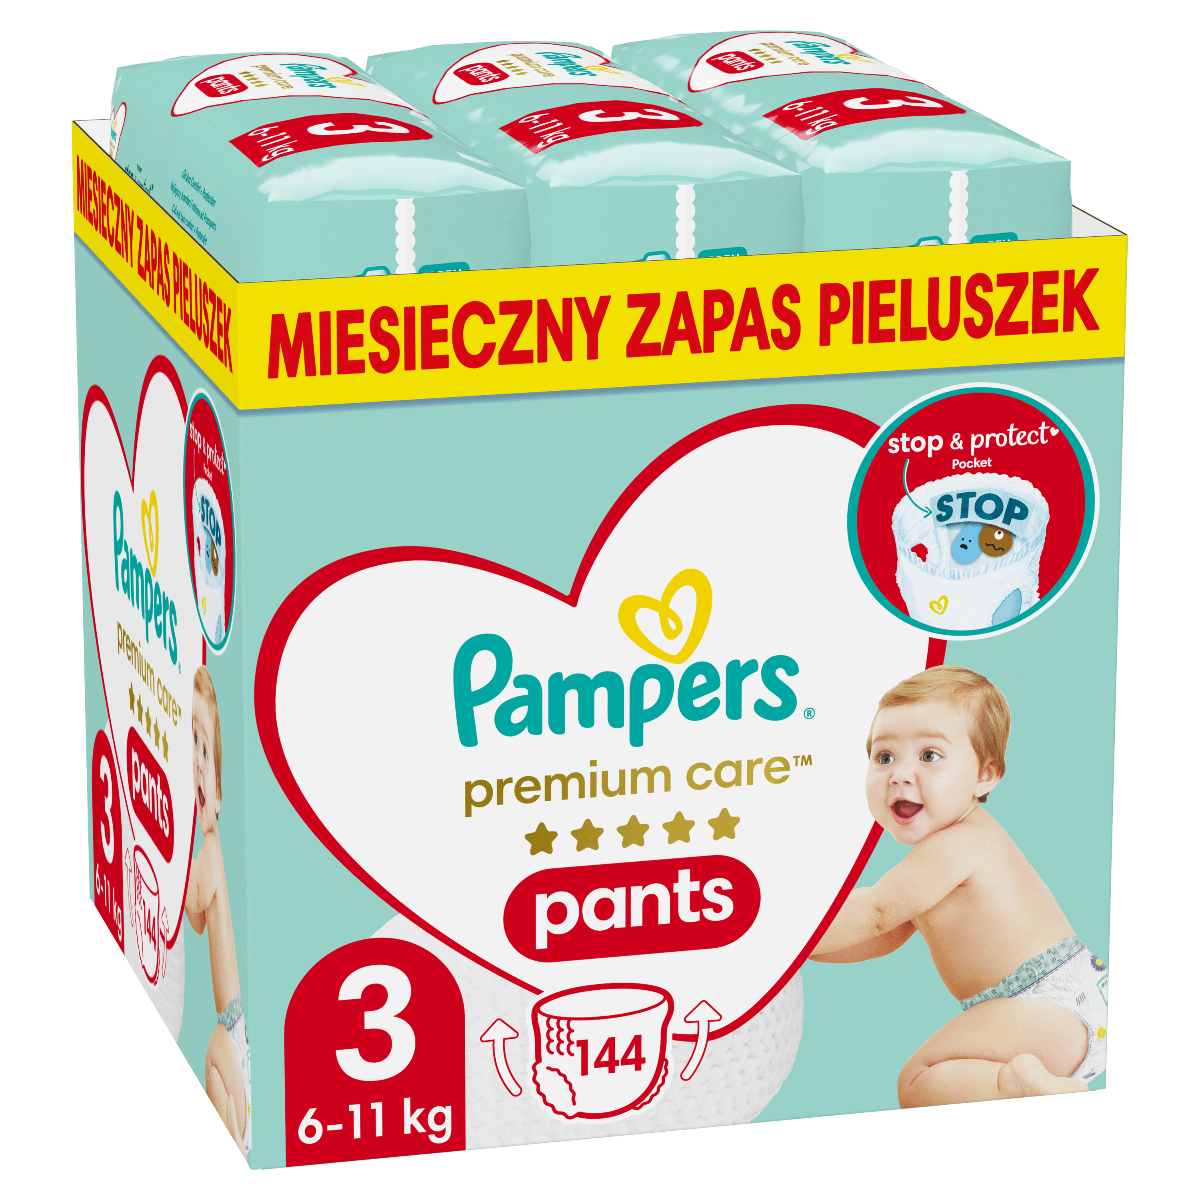 pampers premium newborn